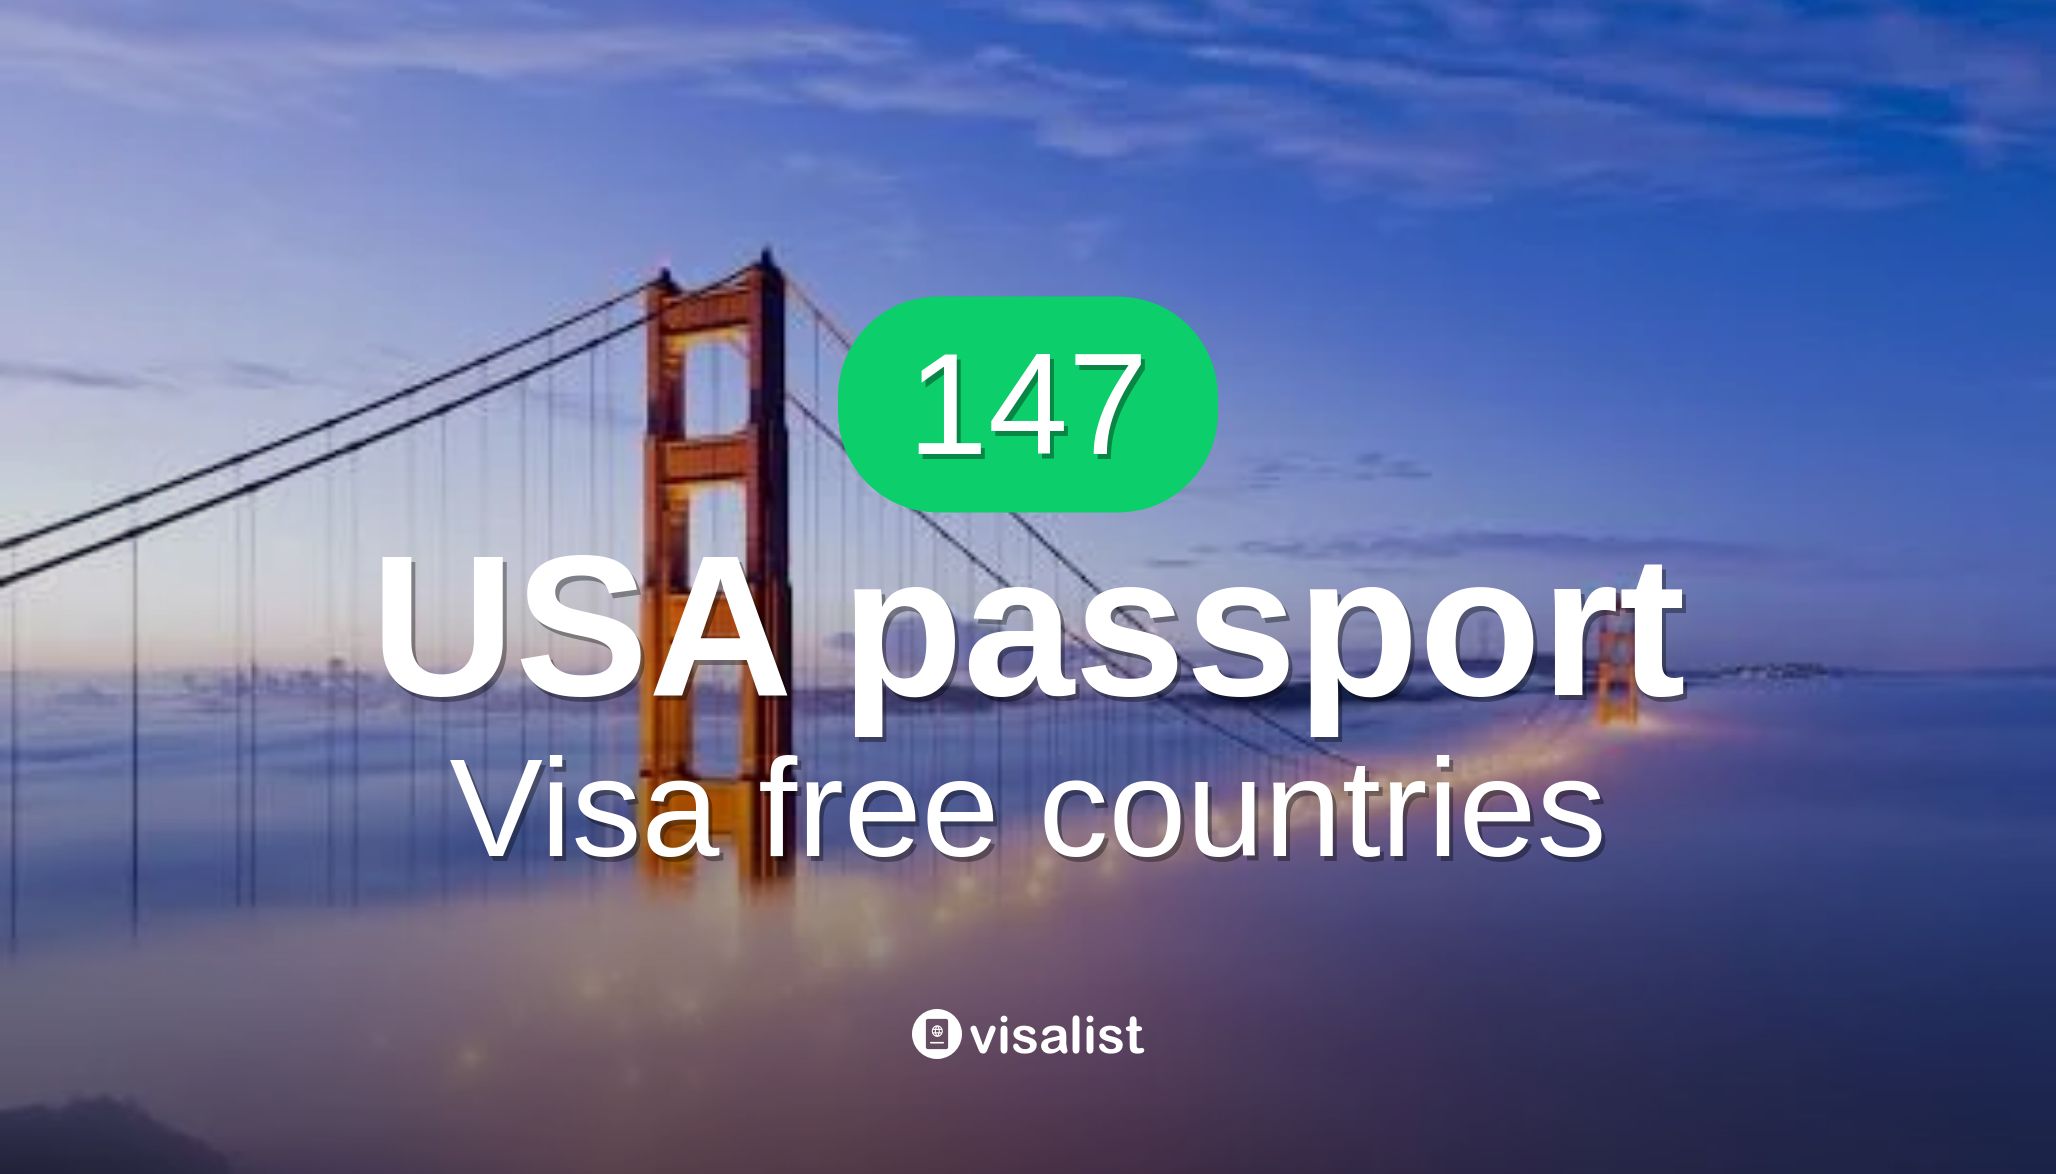 us passport visa free travel countries